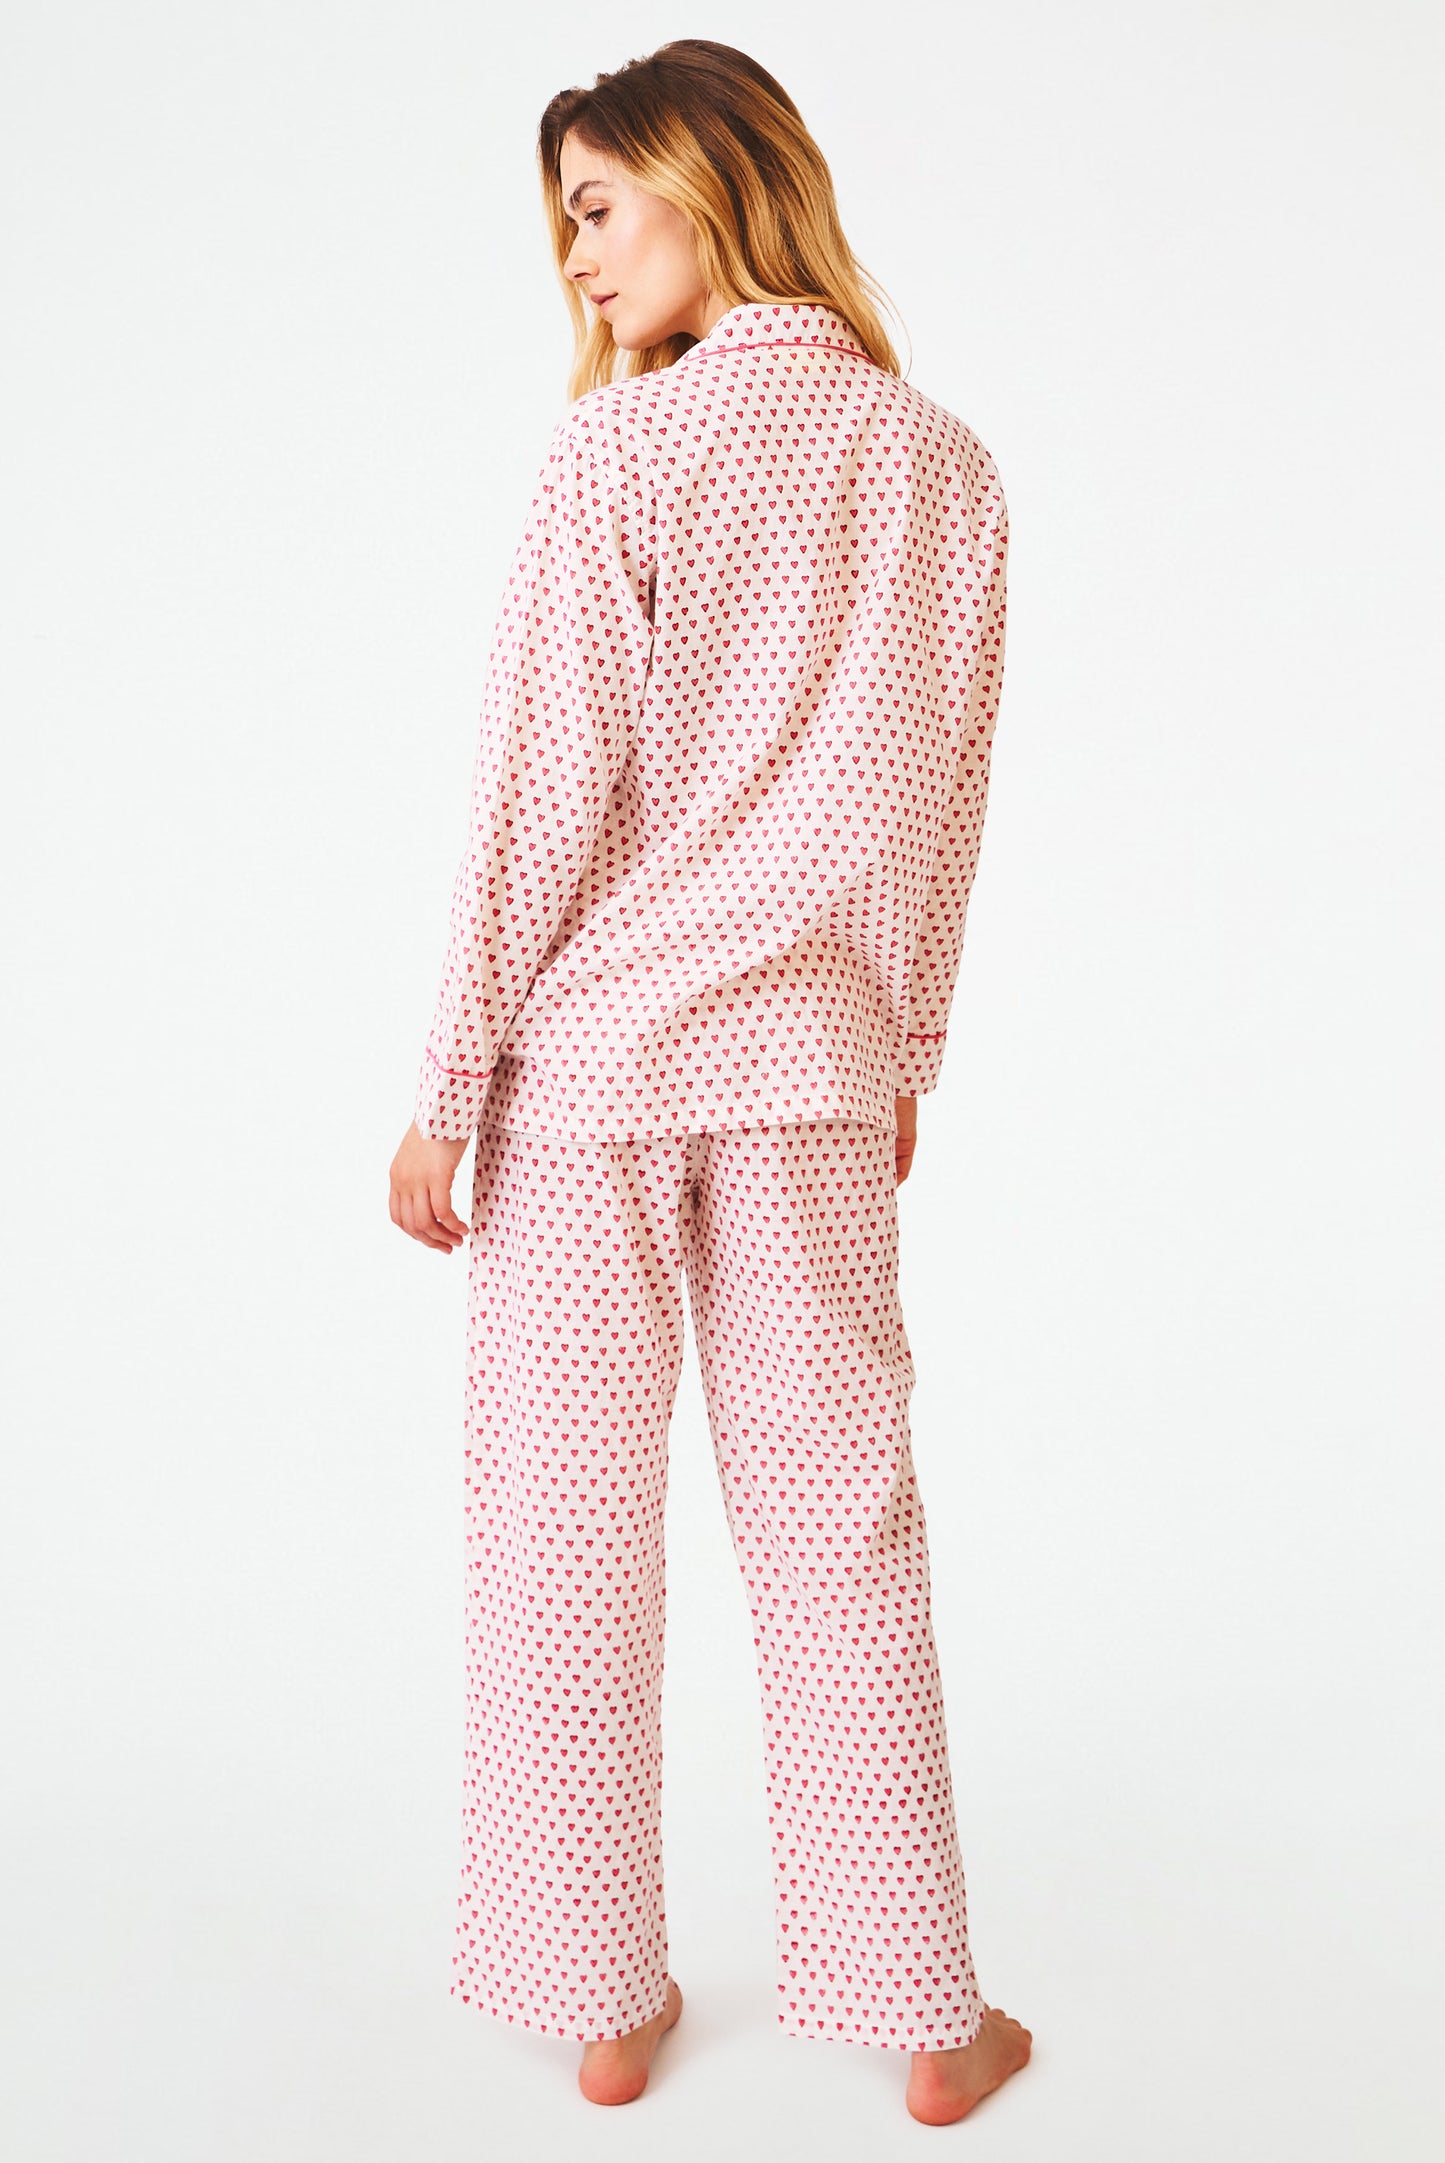 Roller Rabbit Womens Pink Hearts Loungewear